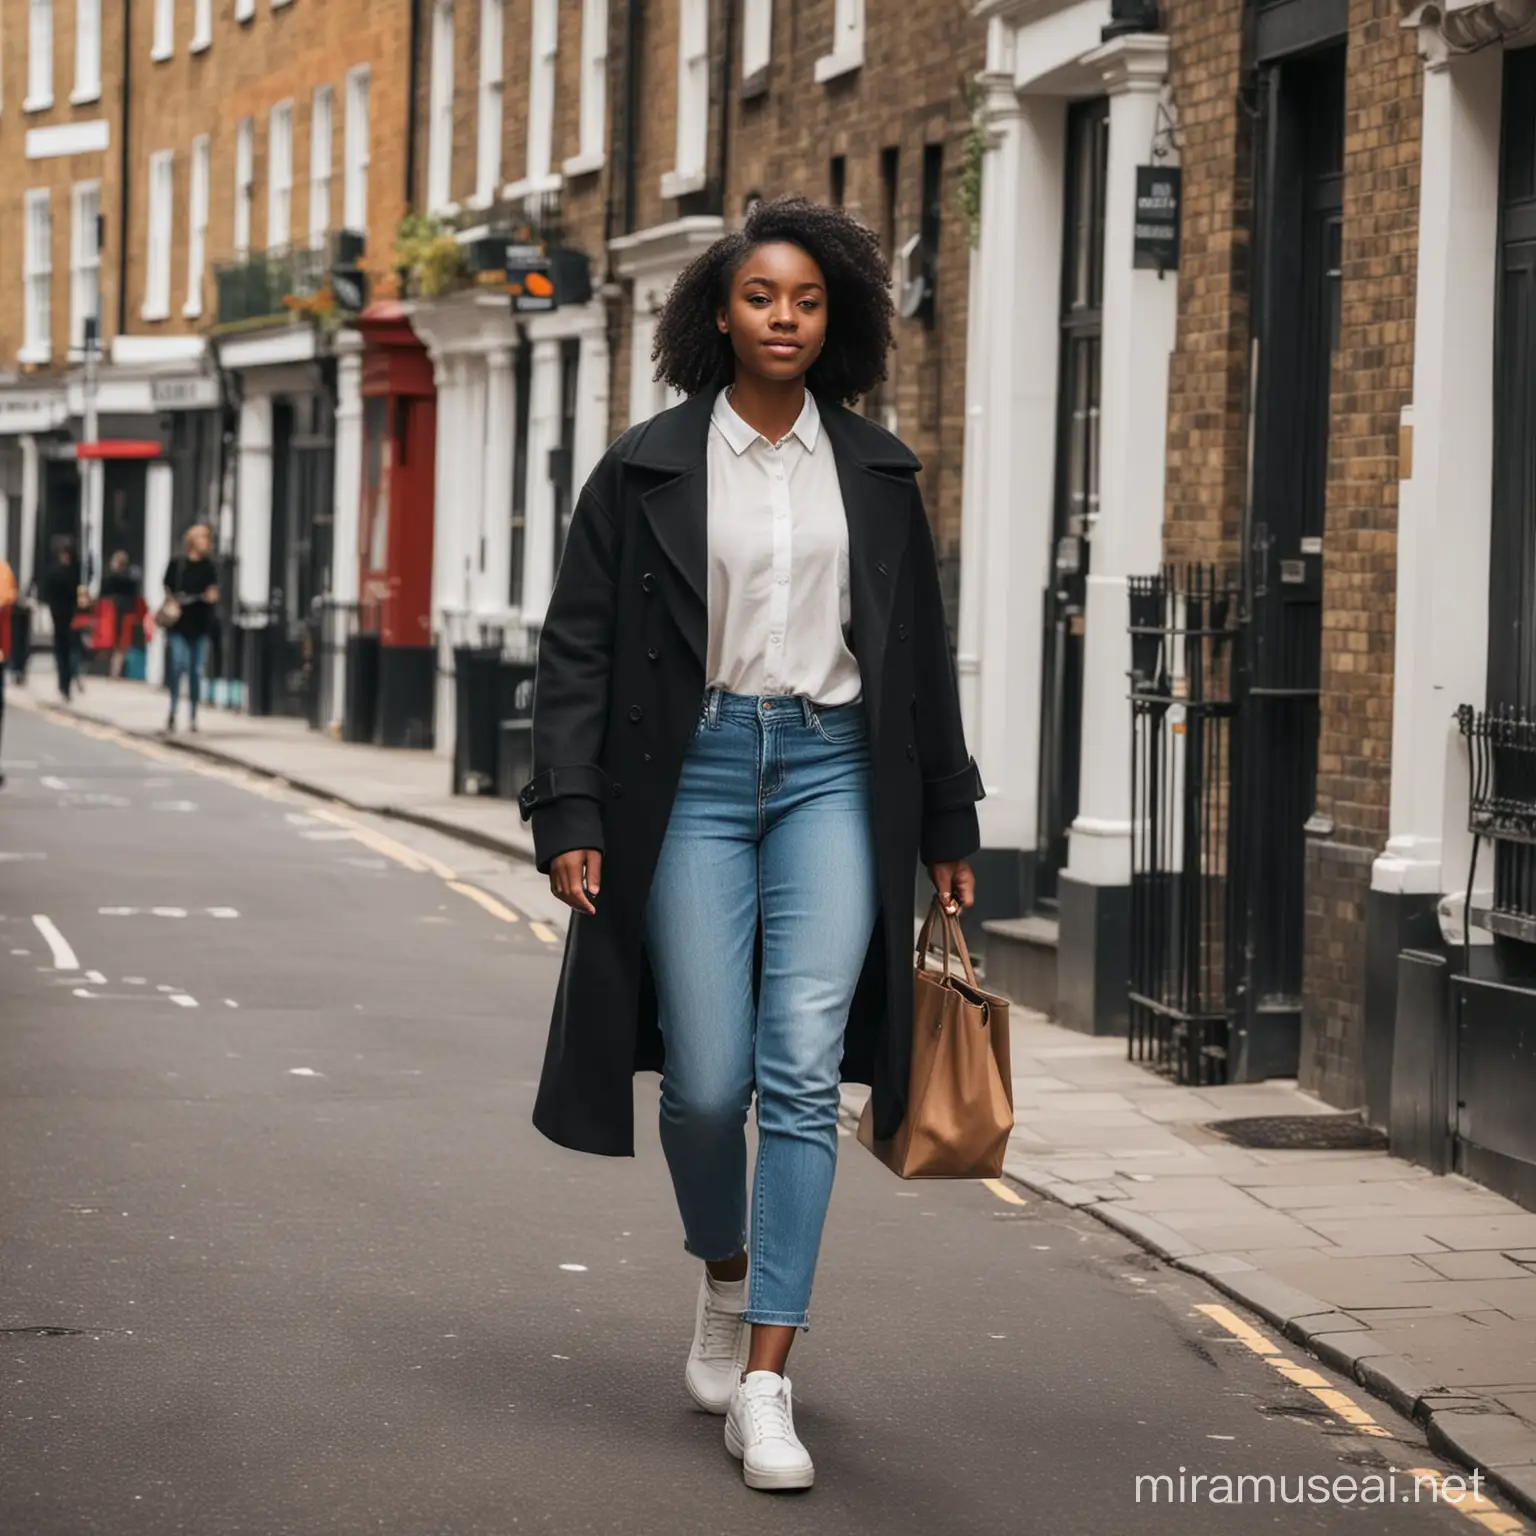 Stylish Black Woman Strolling Along London Street